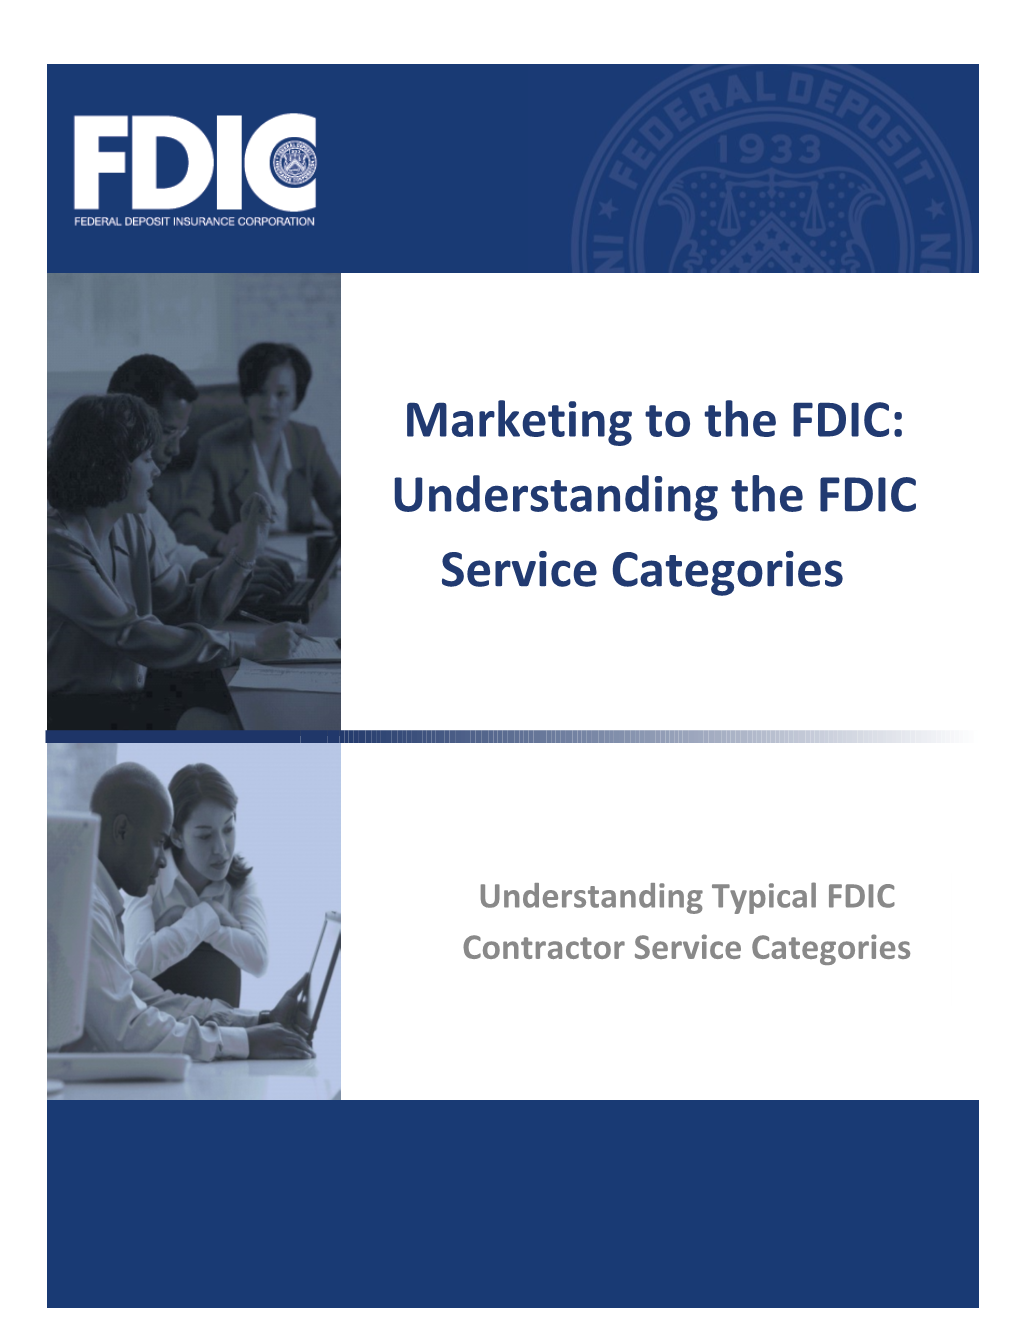 6-1 Marketing to the FDIC - Understanding the FDIC Service Categories